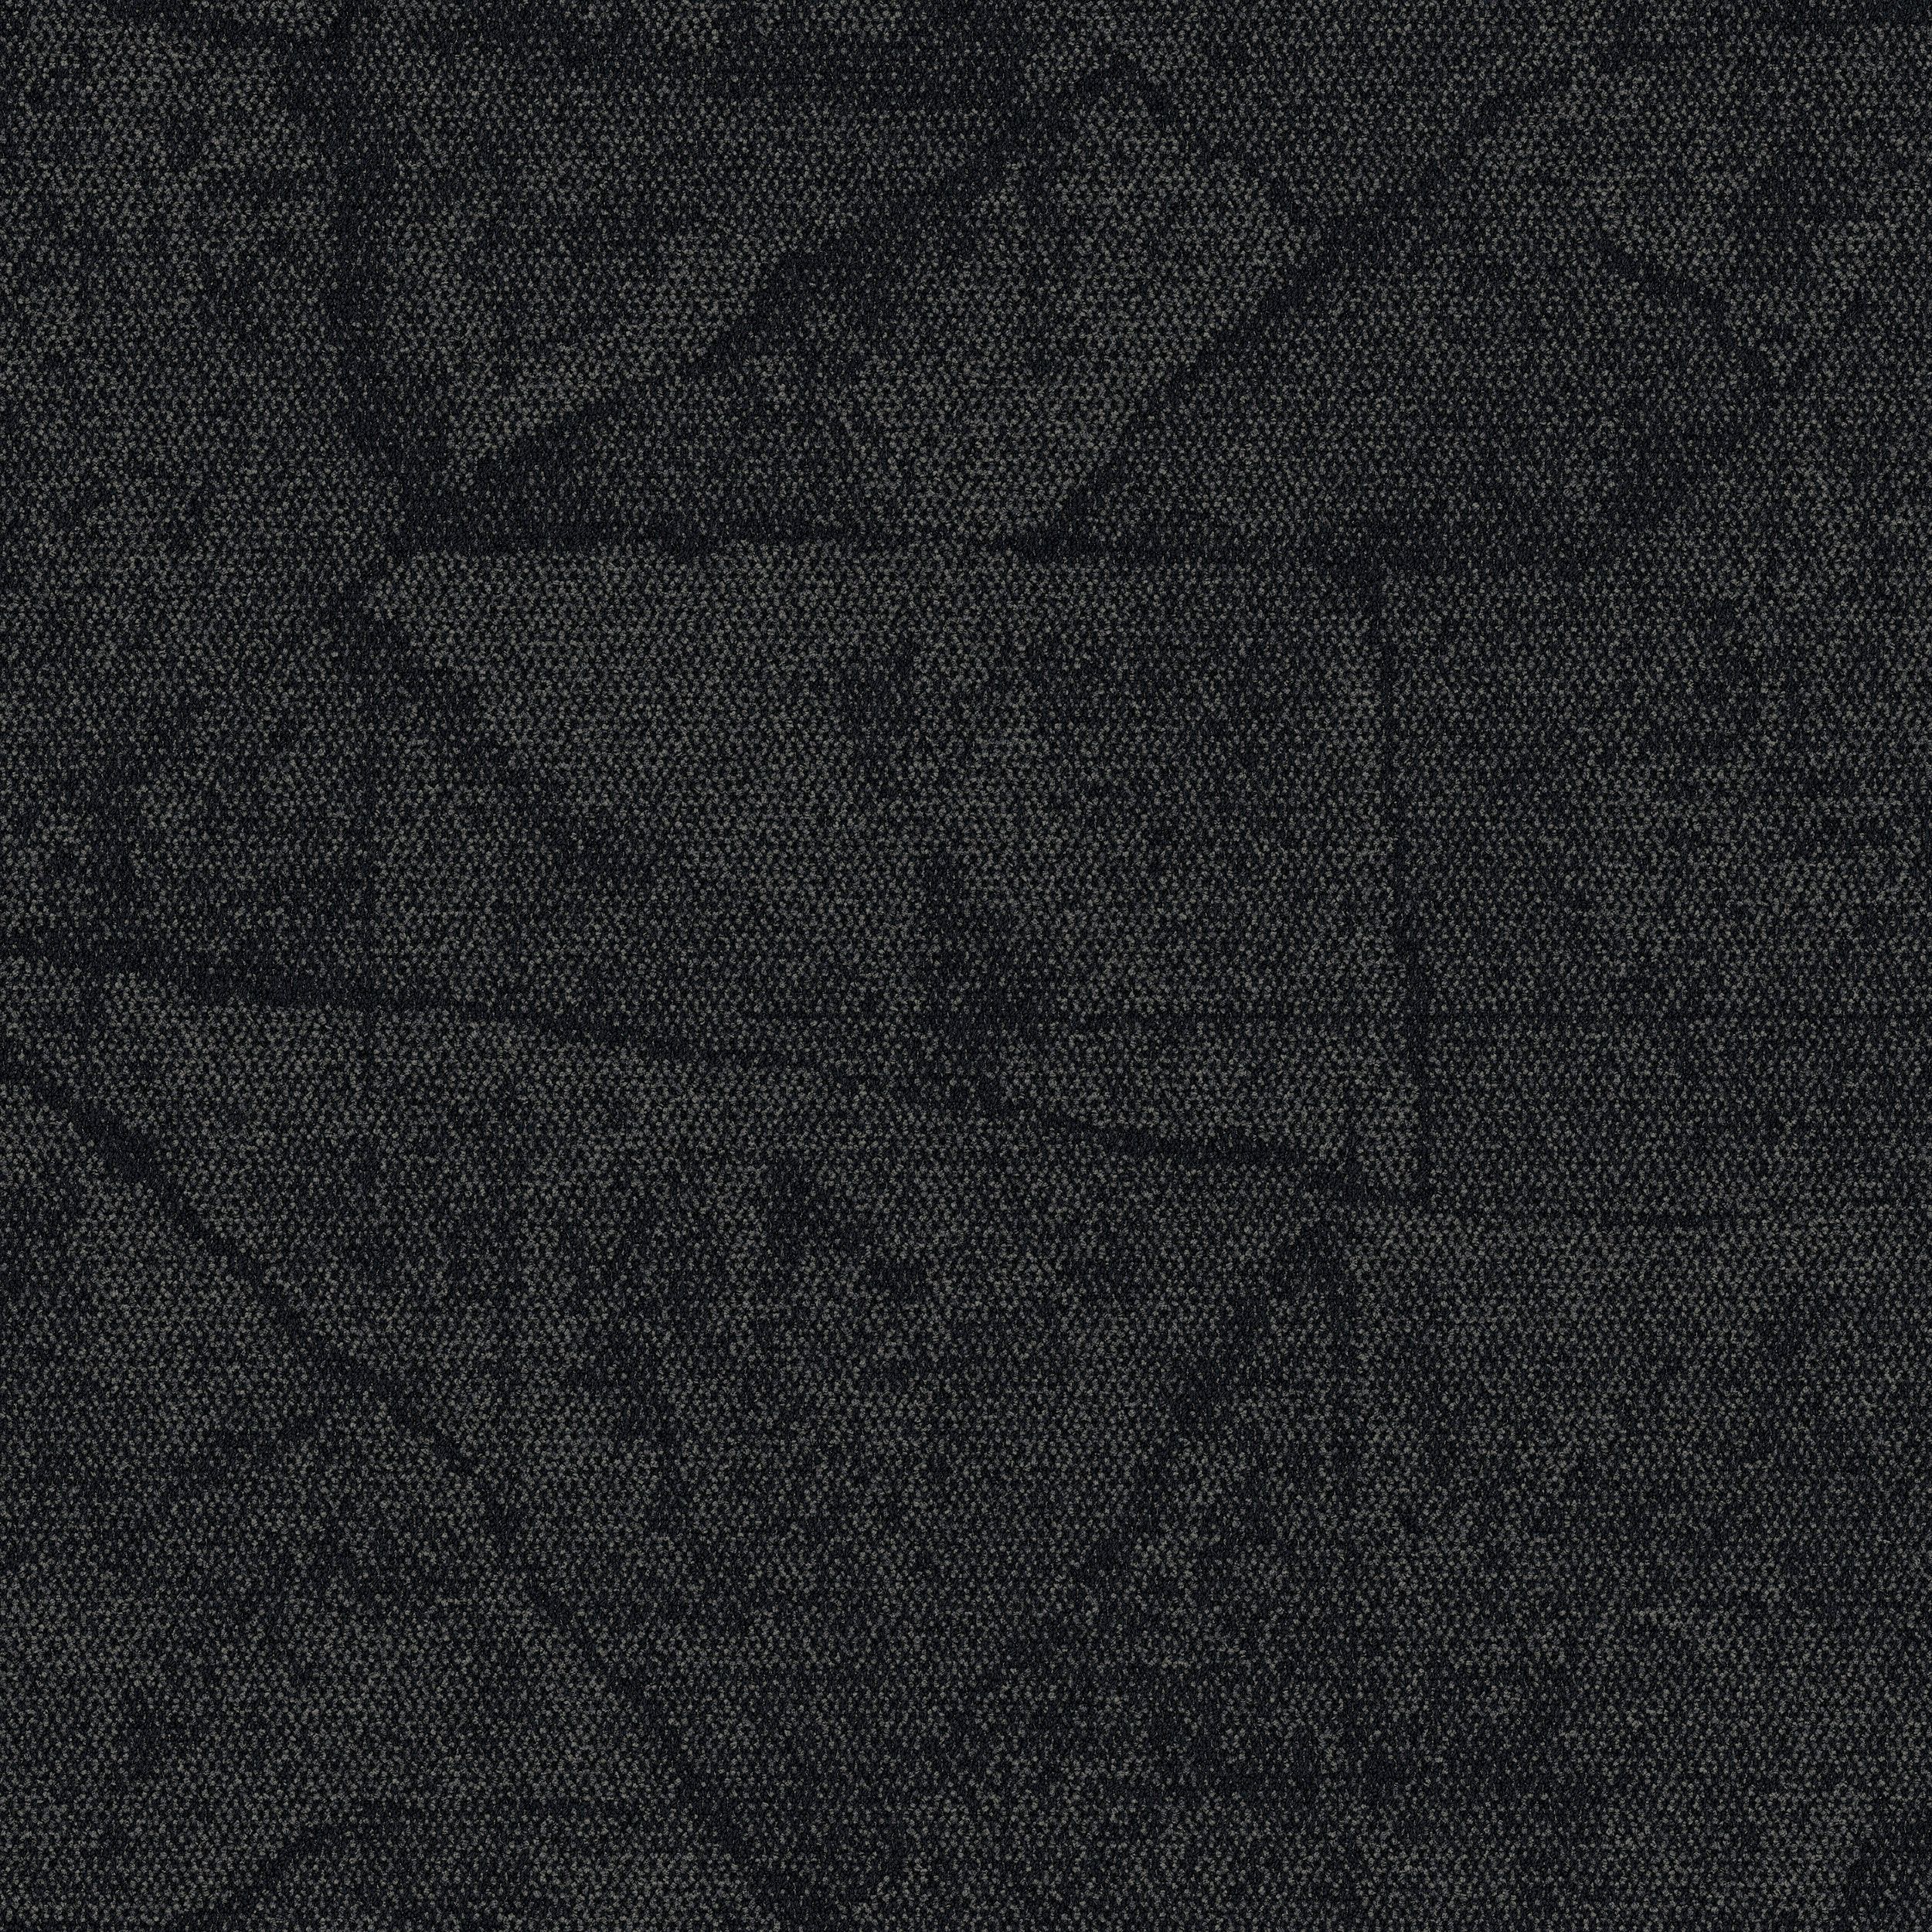 Cap Rock Carpet Tile in Ebony numéro d’image 2